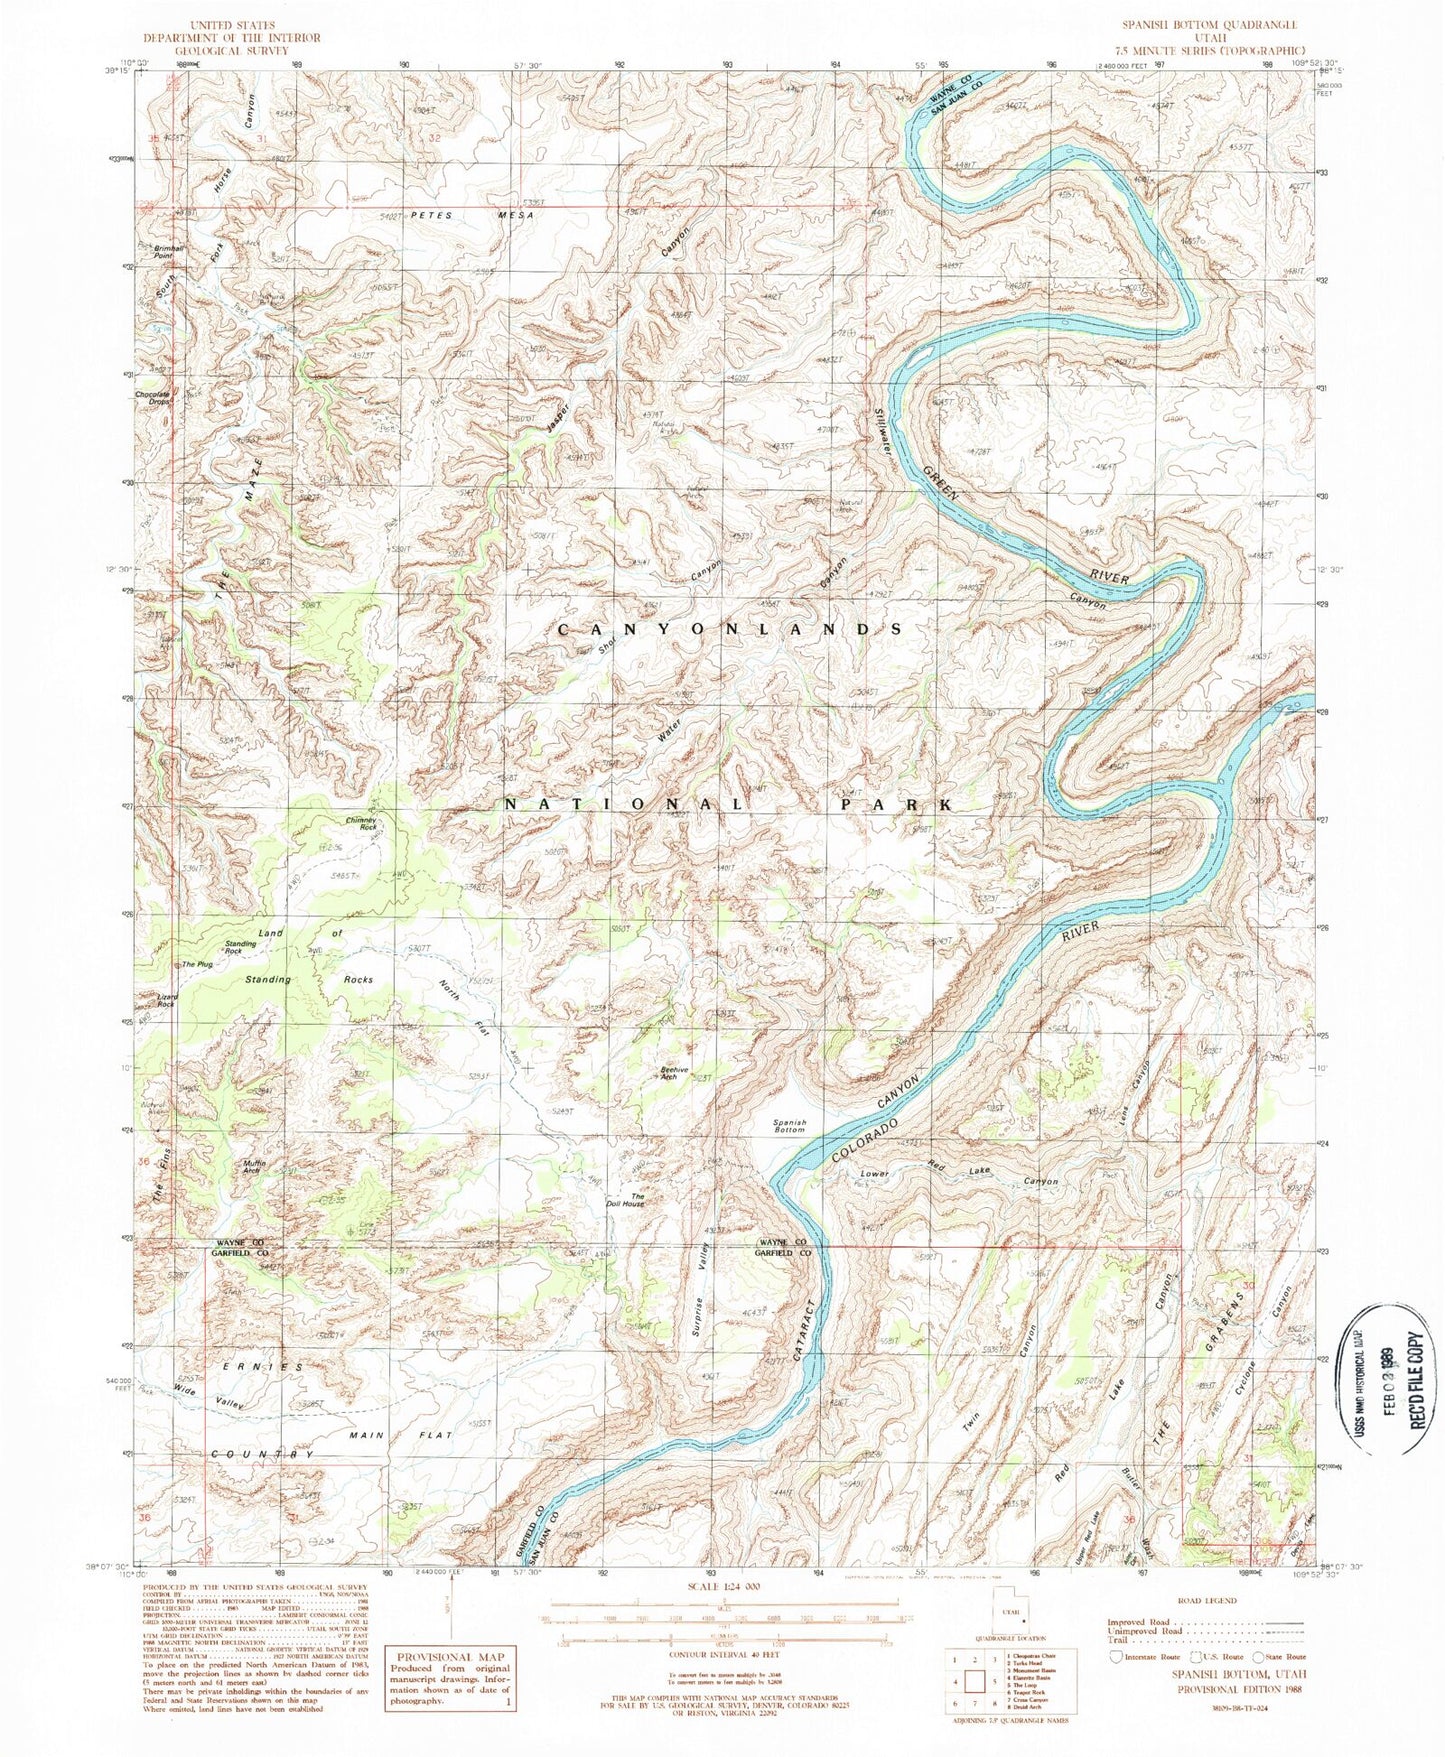 USGS Classic Spanish Bottom Utah 7.5'x7.5' Topo Map Image